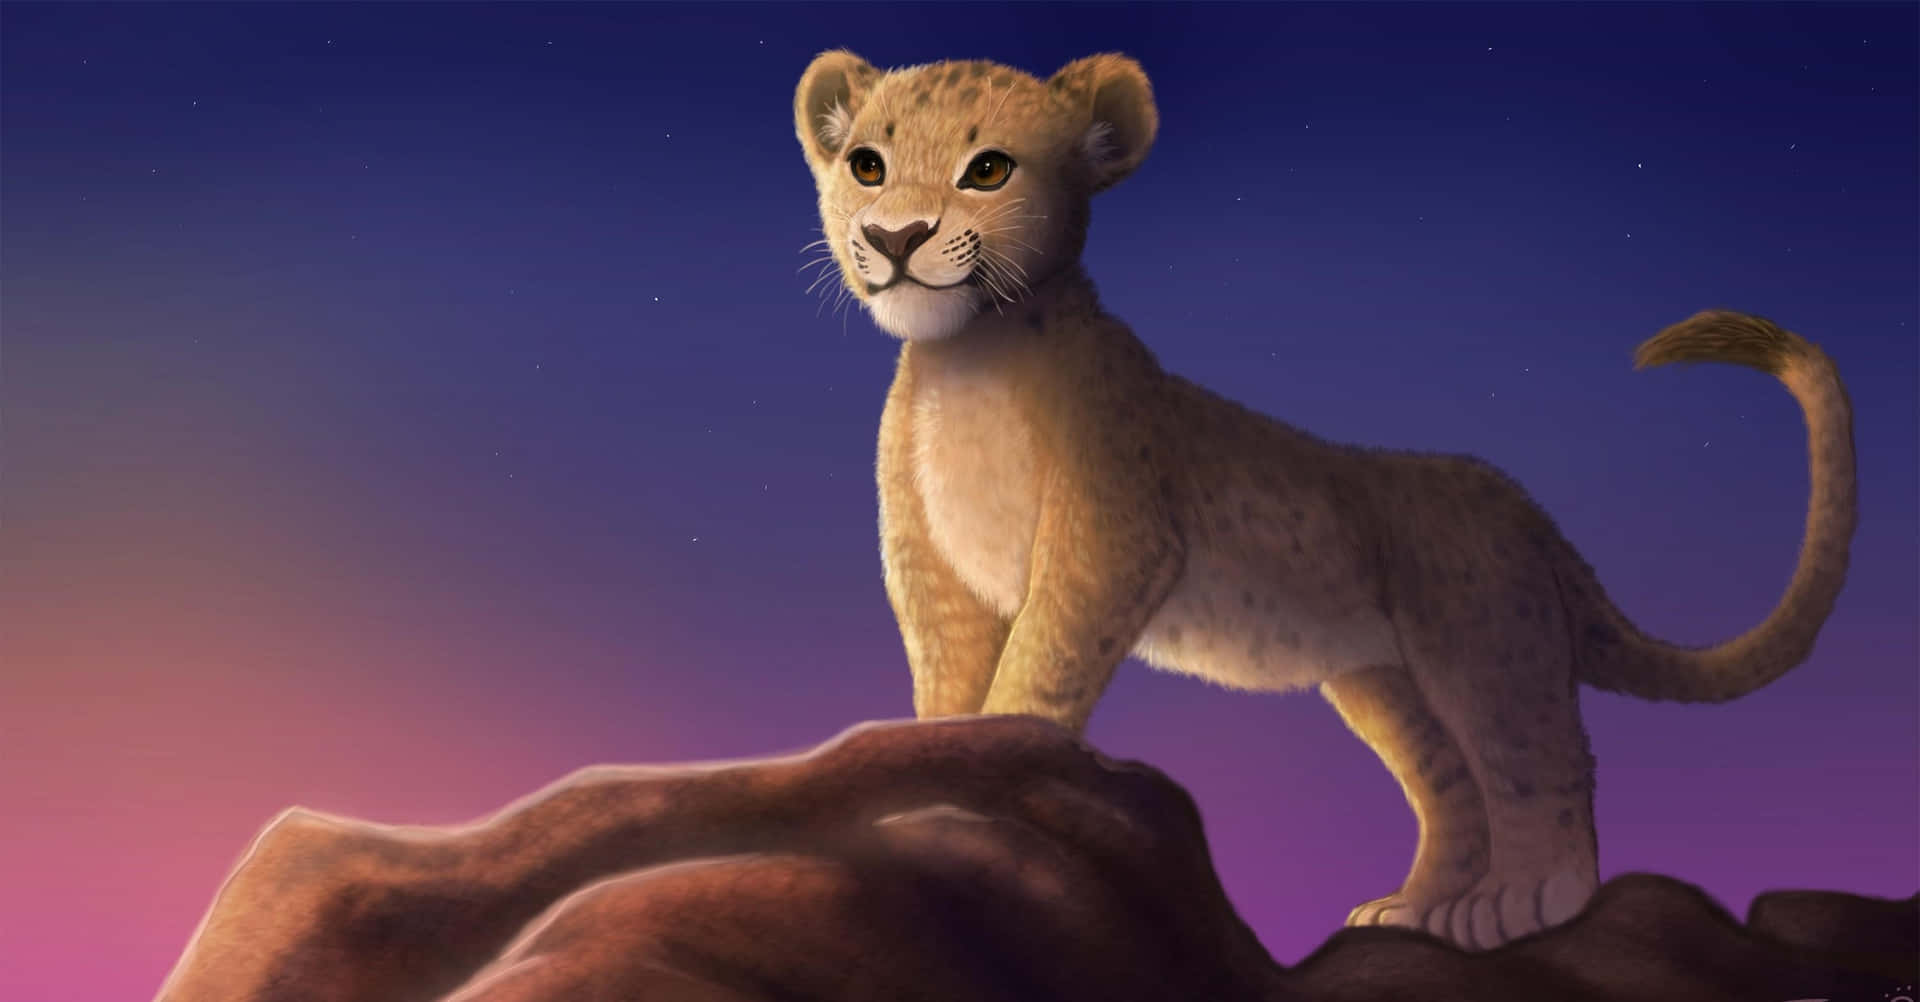 Cute Lion King 2019 Baby Simba Wallpaper